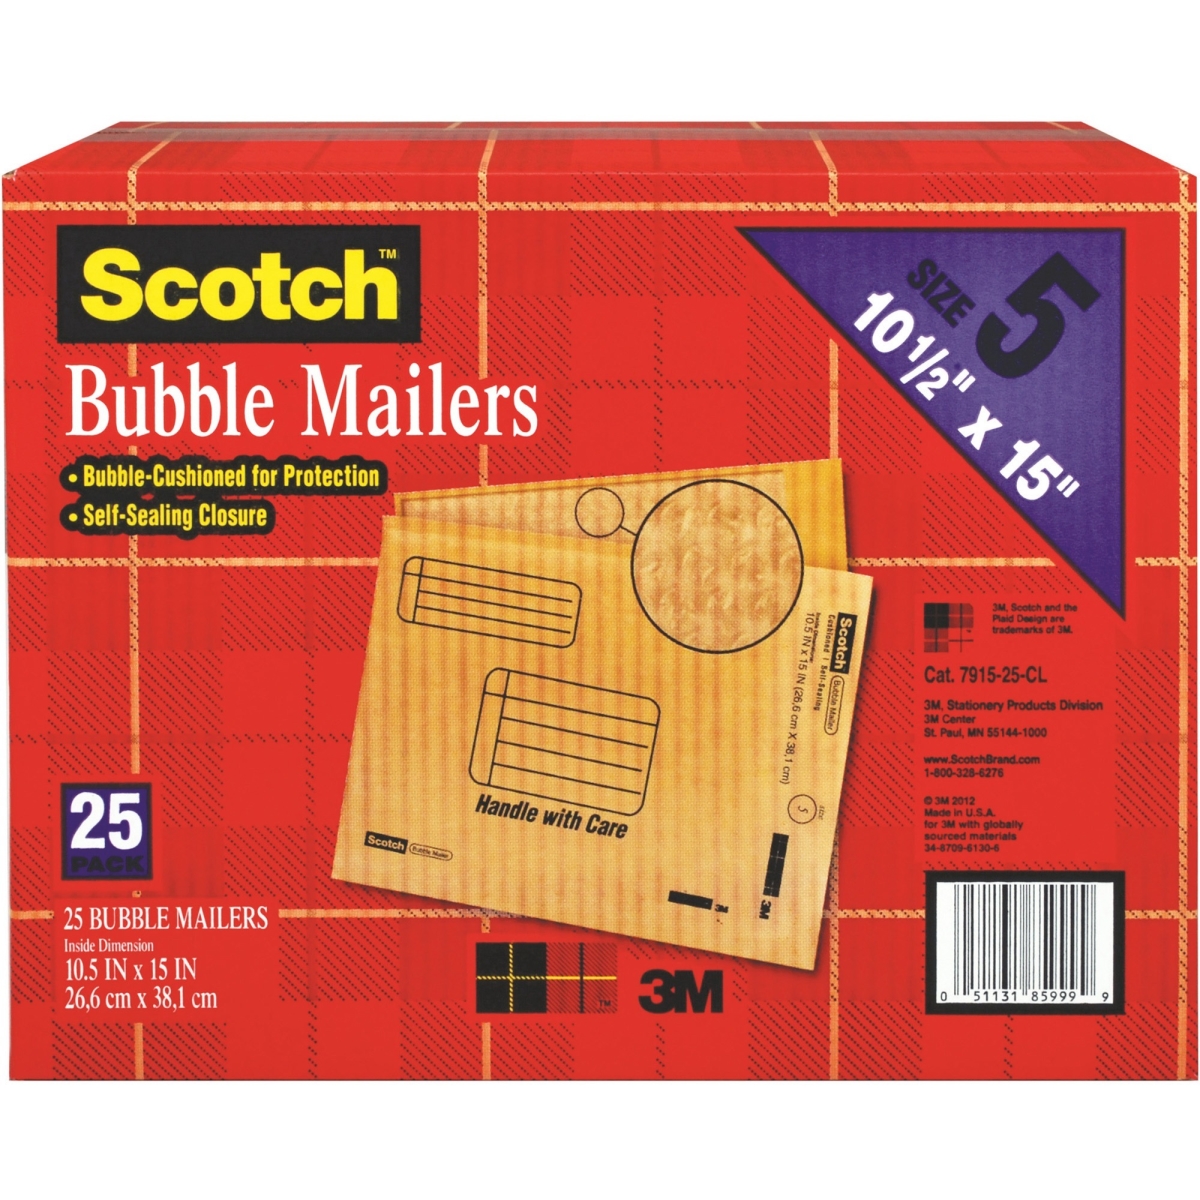 Mmm791525cs 10.5 X 16 In. Scotch Bubble Mailers, Tan